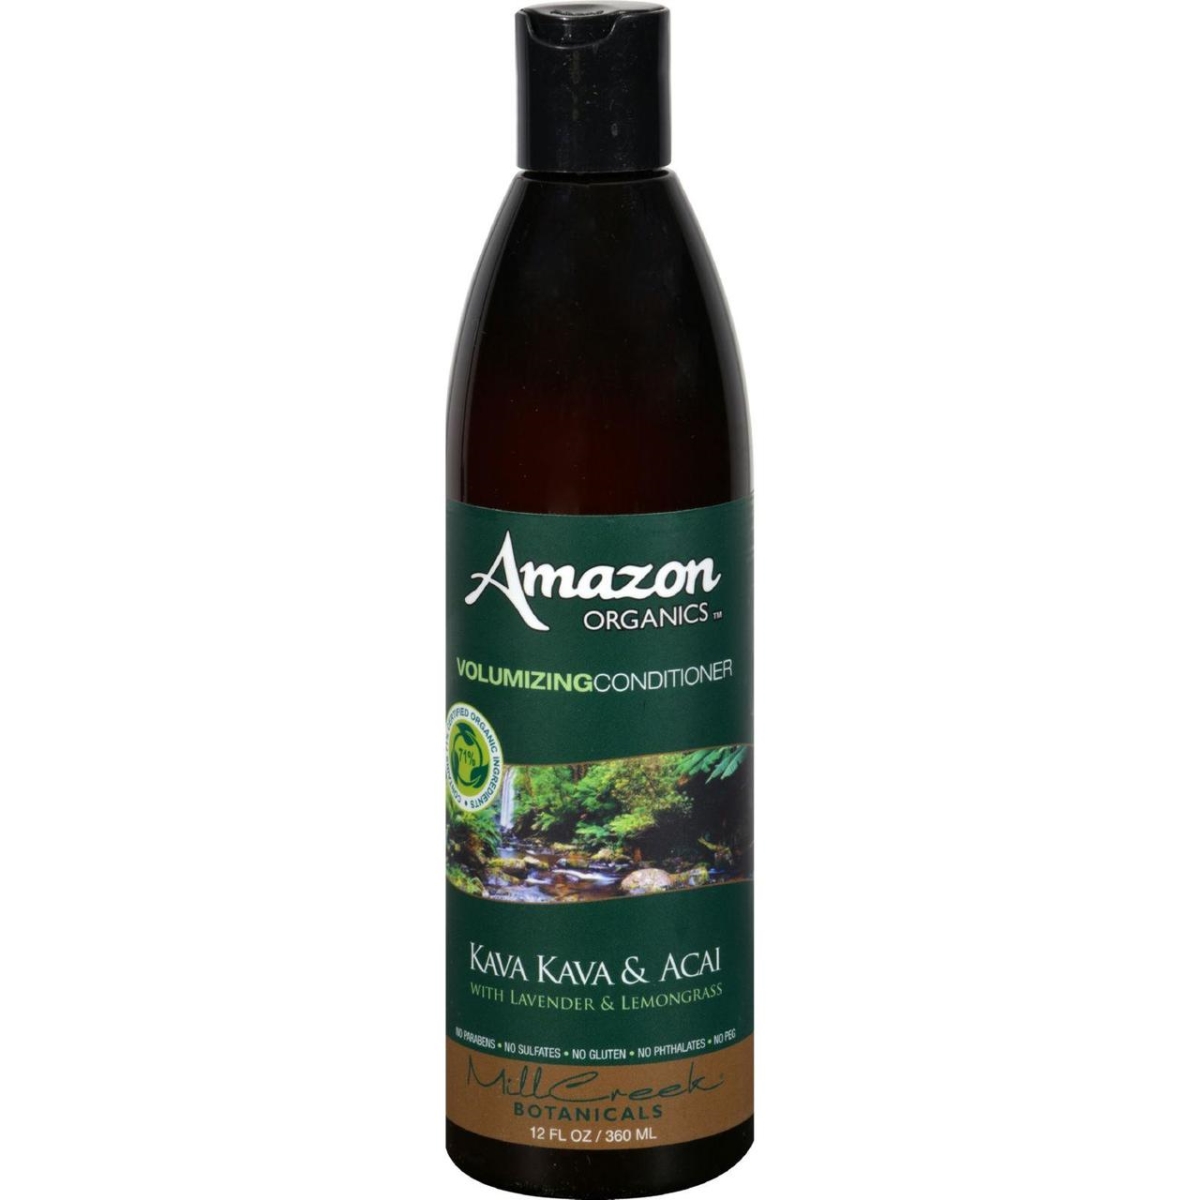 Hg0255067 12 Fl Oz Amazon Organics Volumizing Conditioner Lavender & Lemon Grass